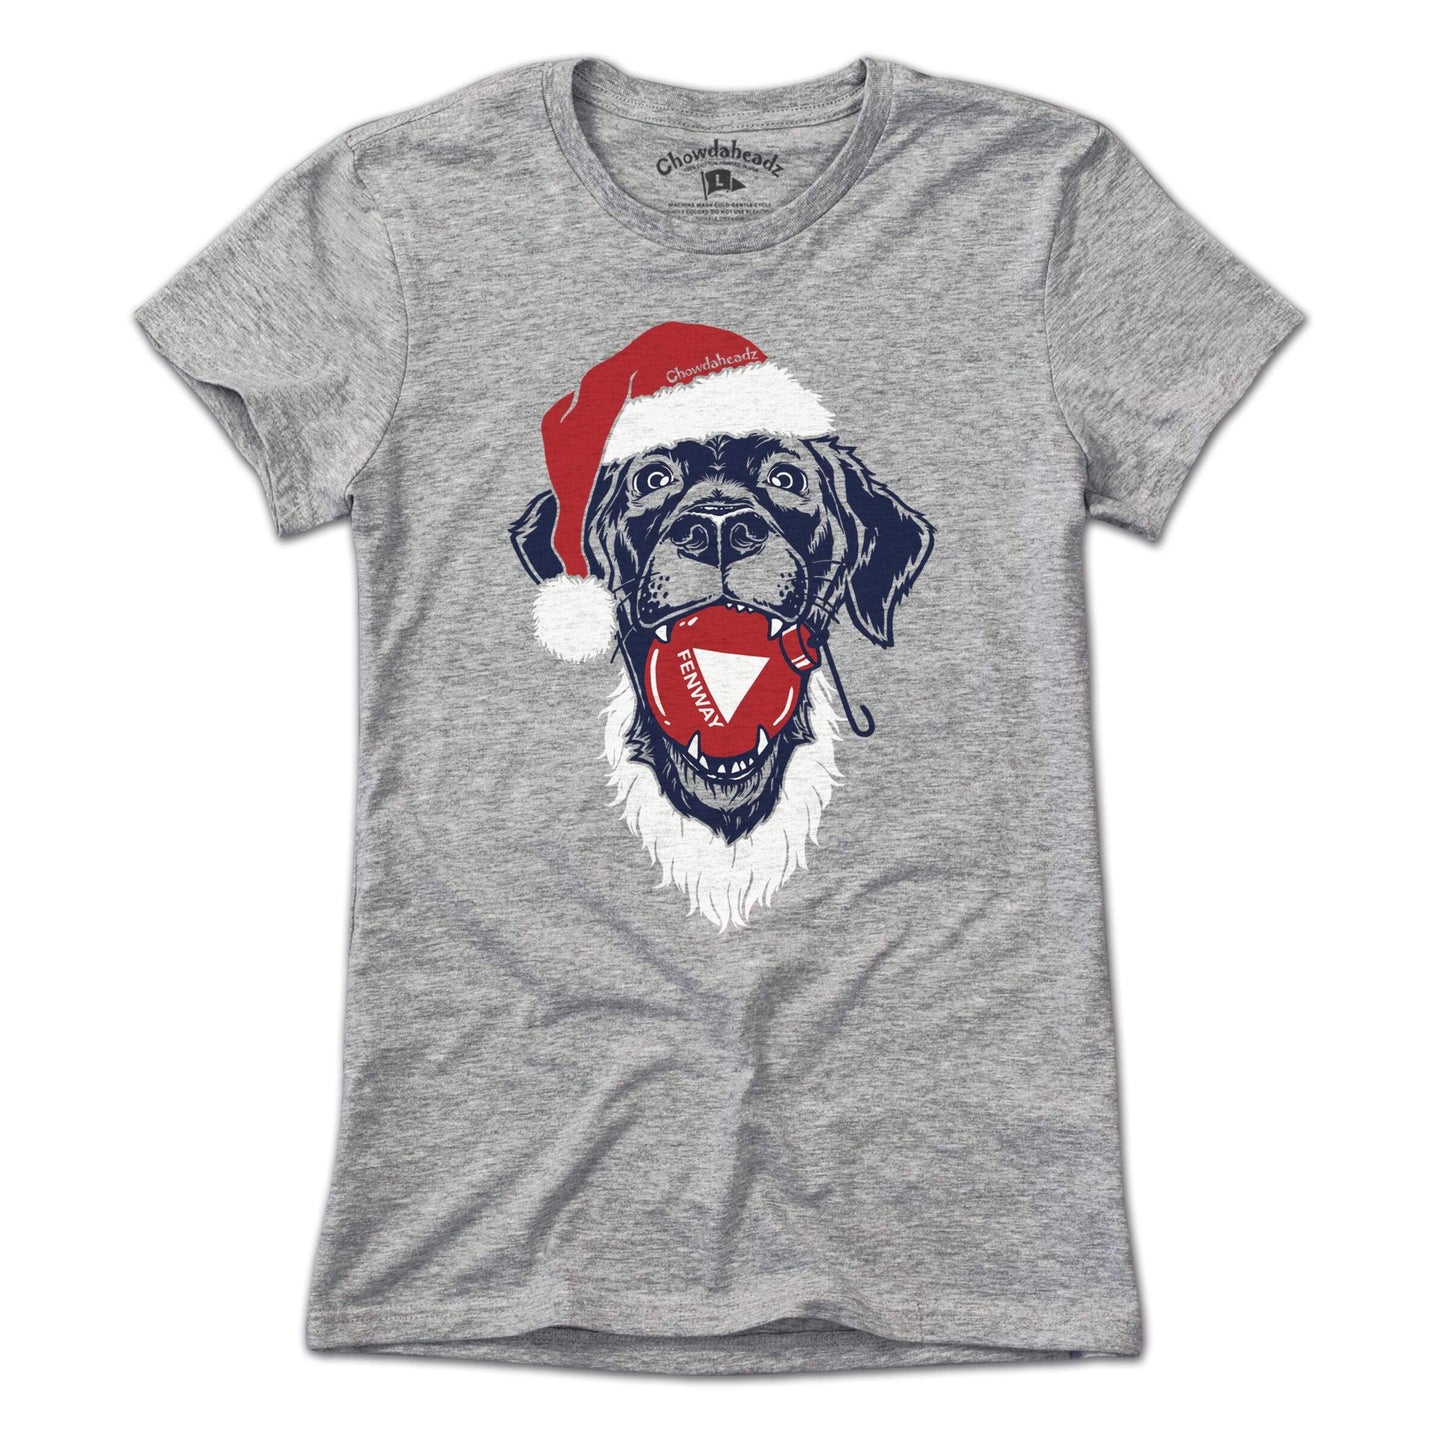 Santa Paws Fenway Dog T-Shirt - Chowdaheadz